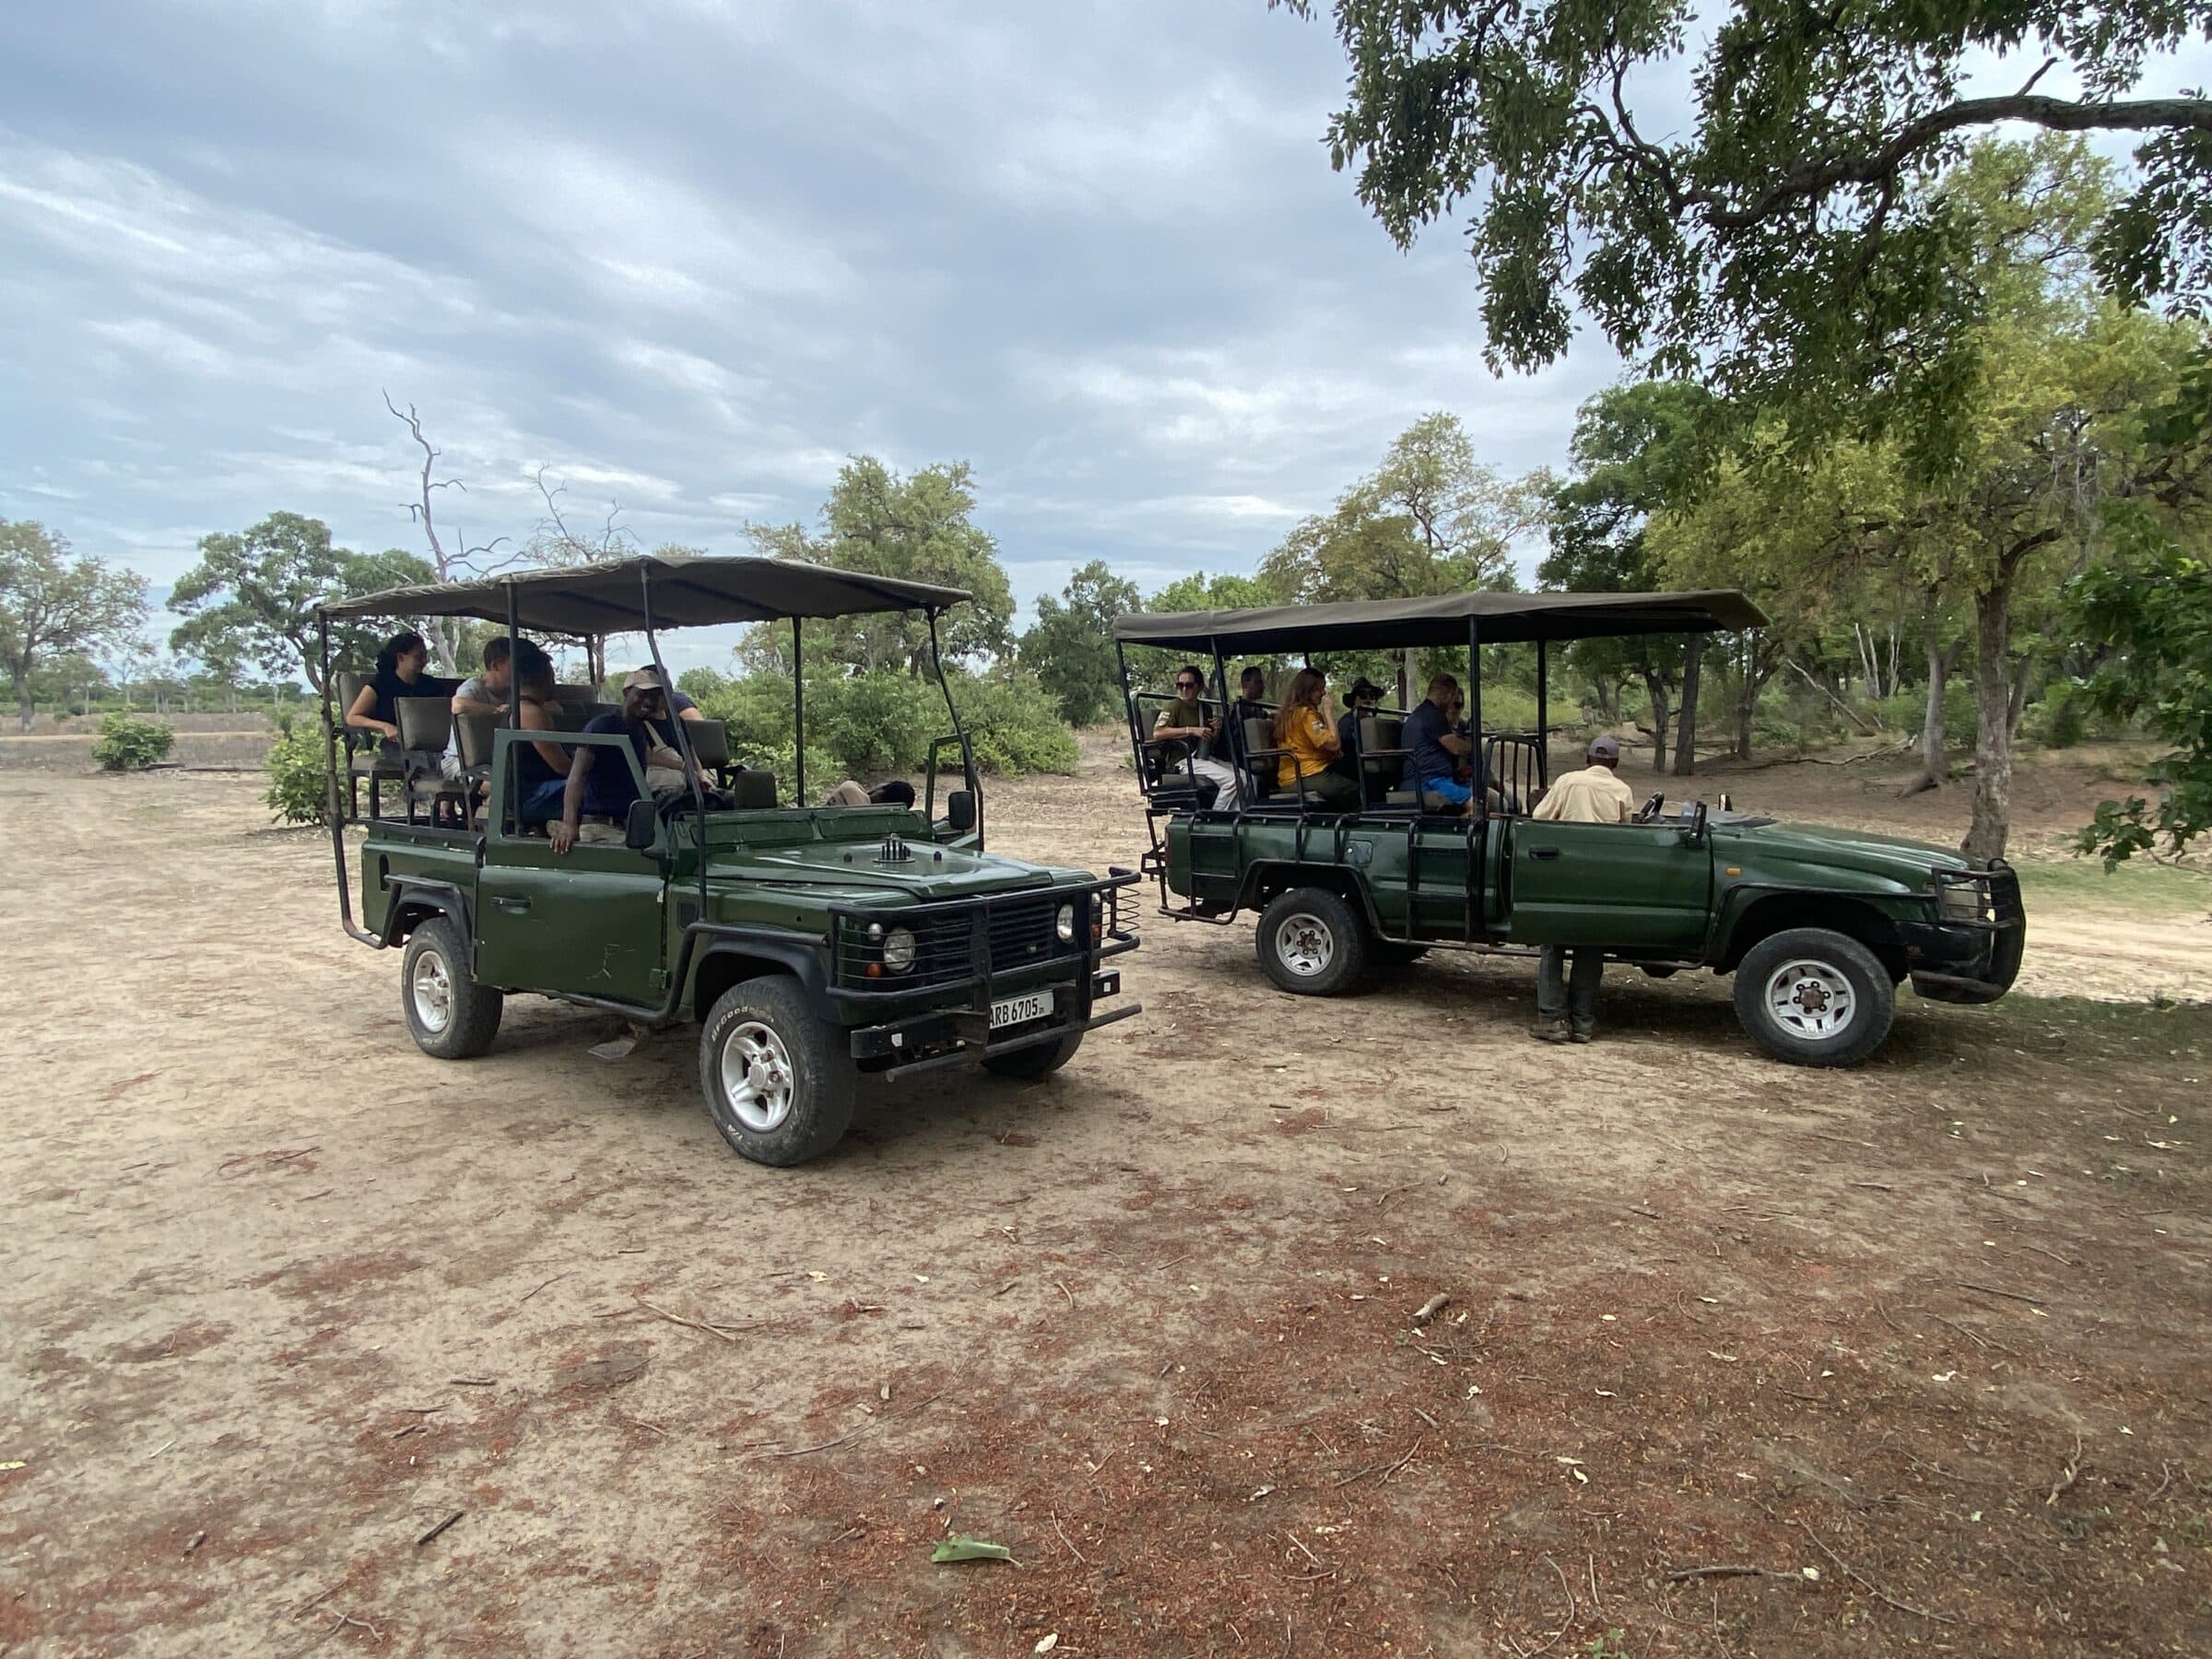 Safari trucks in South Luangwa National Park